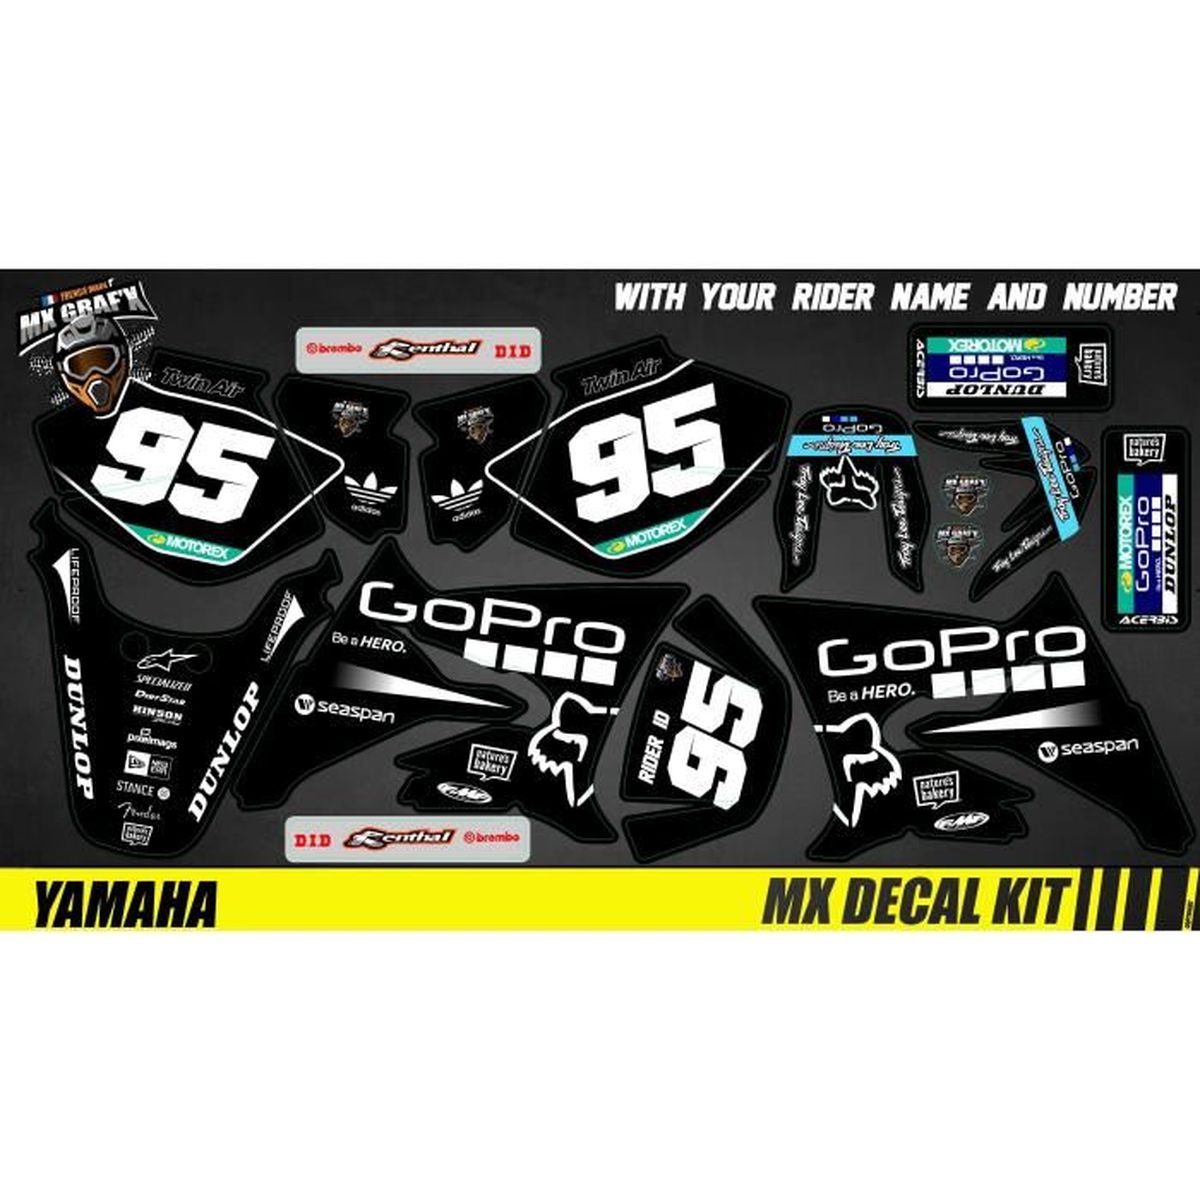 Kit Déco Moto pour GoPro Black Mx Decal Kit for Yamaha DT50 